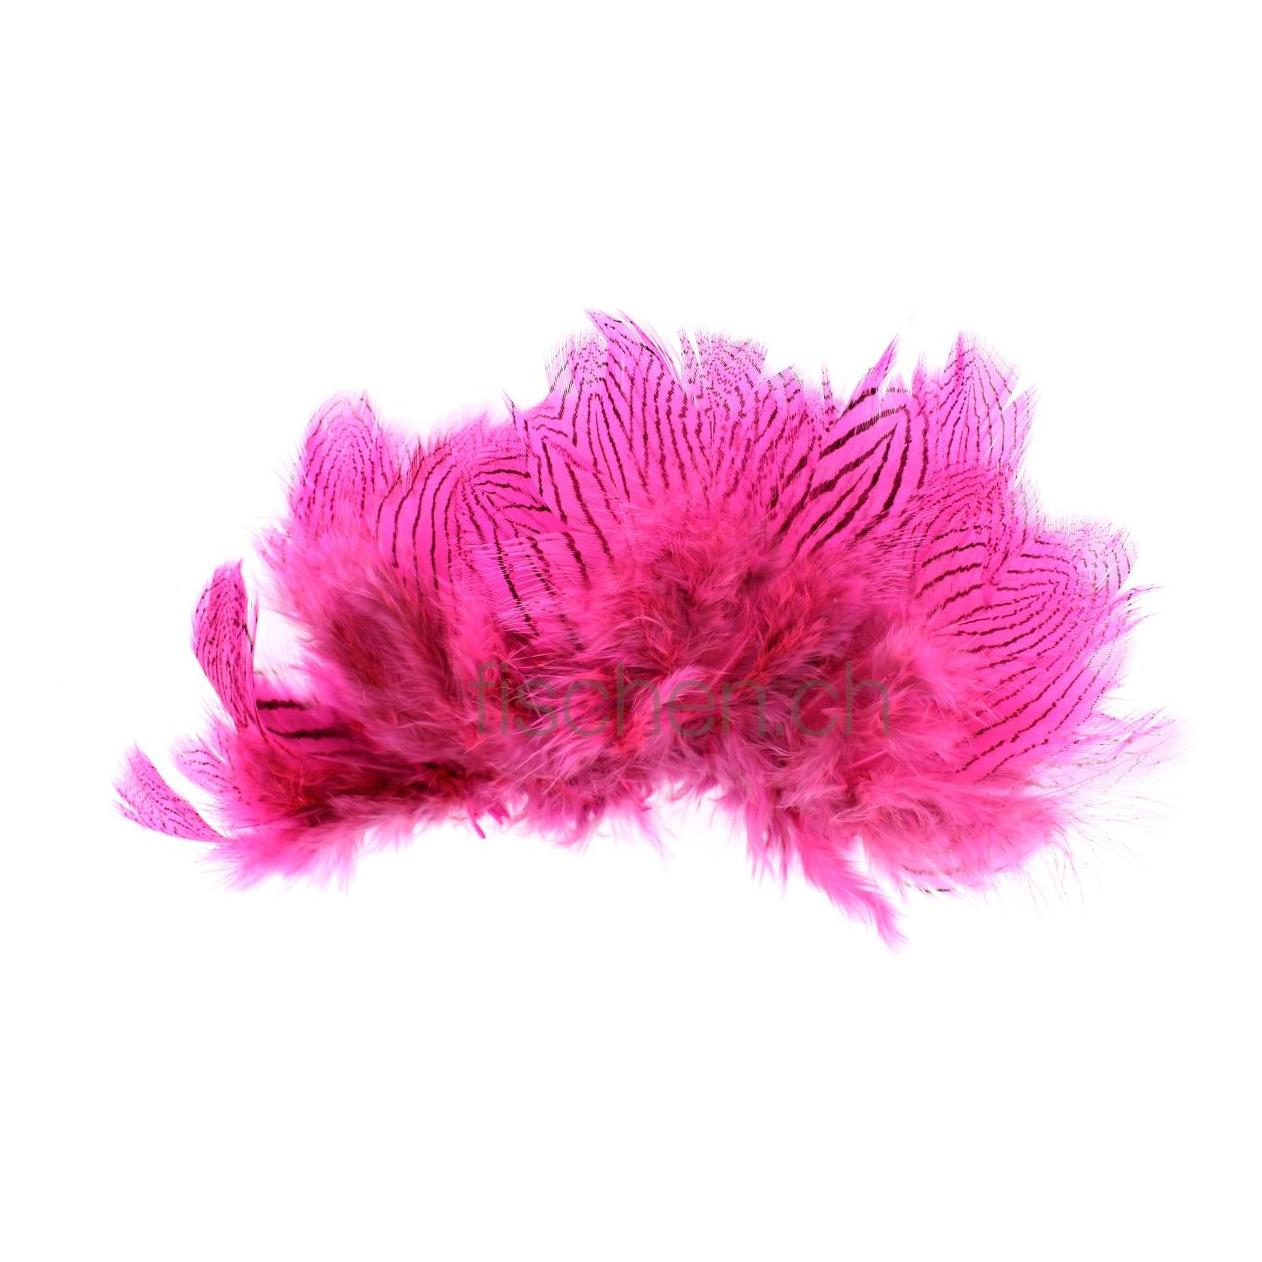 Image of Hareline Dubbin Silver Pheasant Body Feathers - hot pink bei fischen.ch